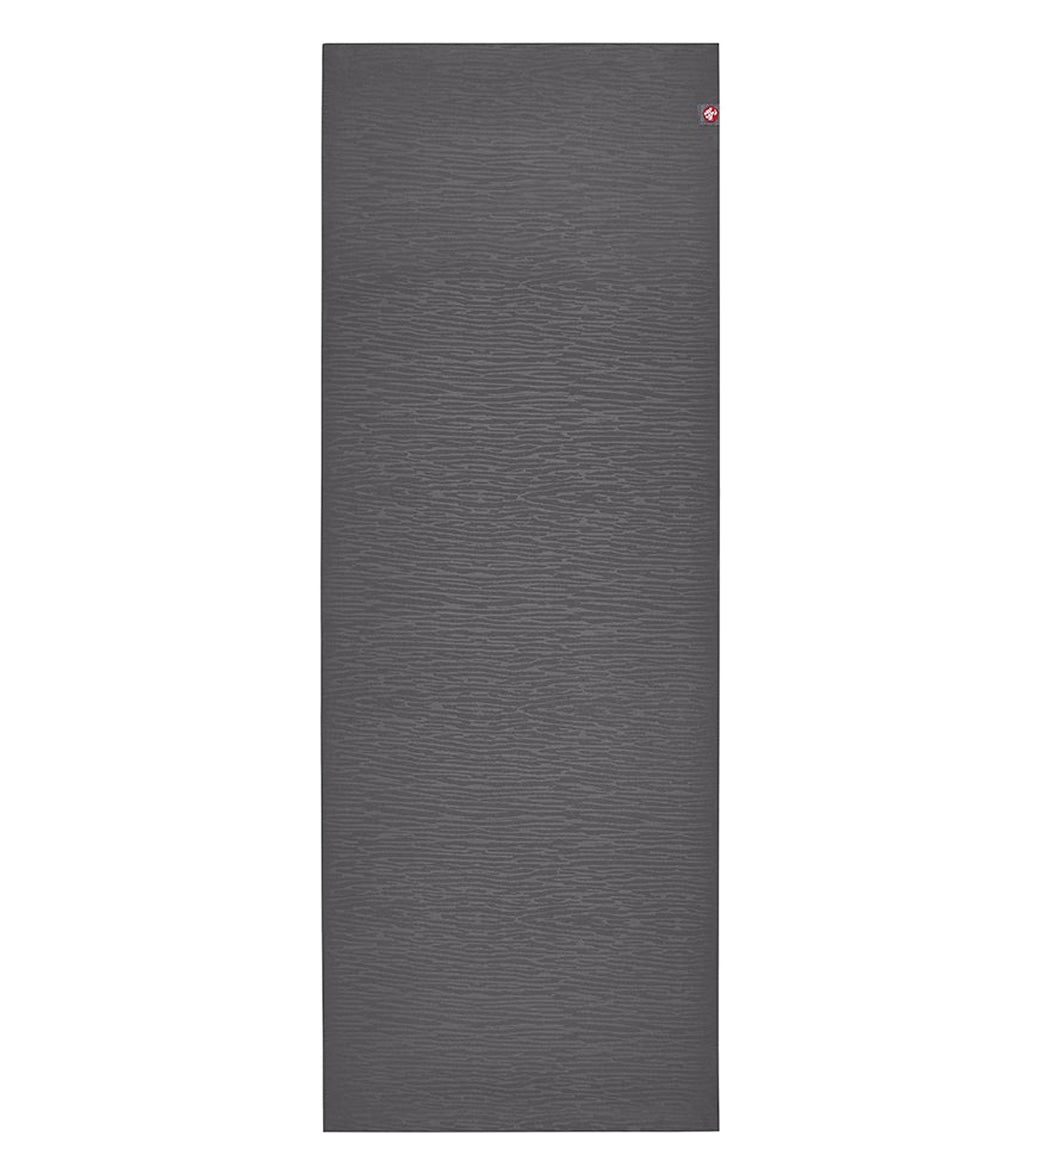 Manduka eKO Lite Yoga Mat - durable natural rubber travel mat